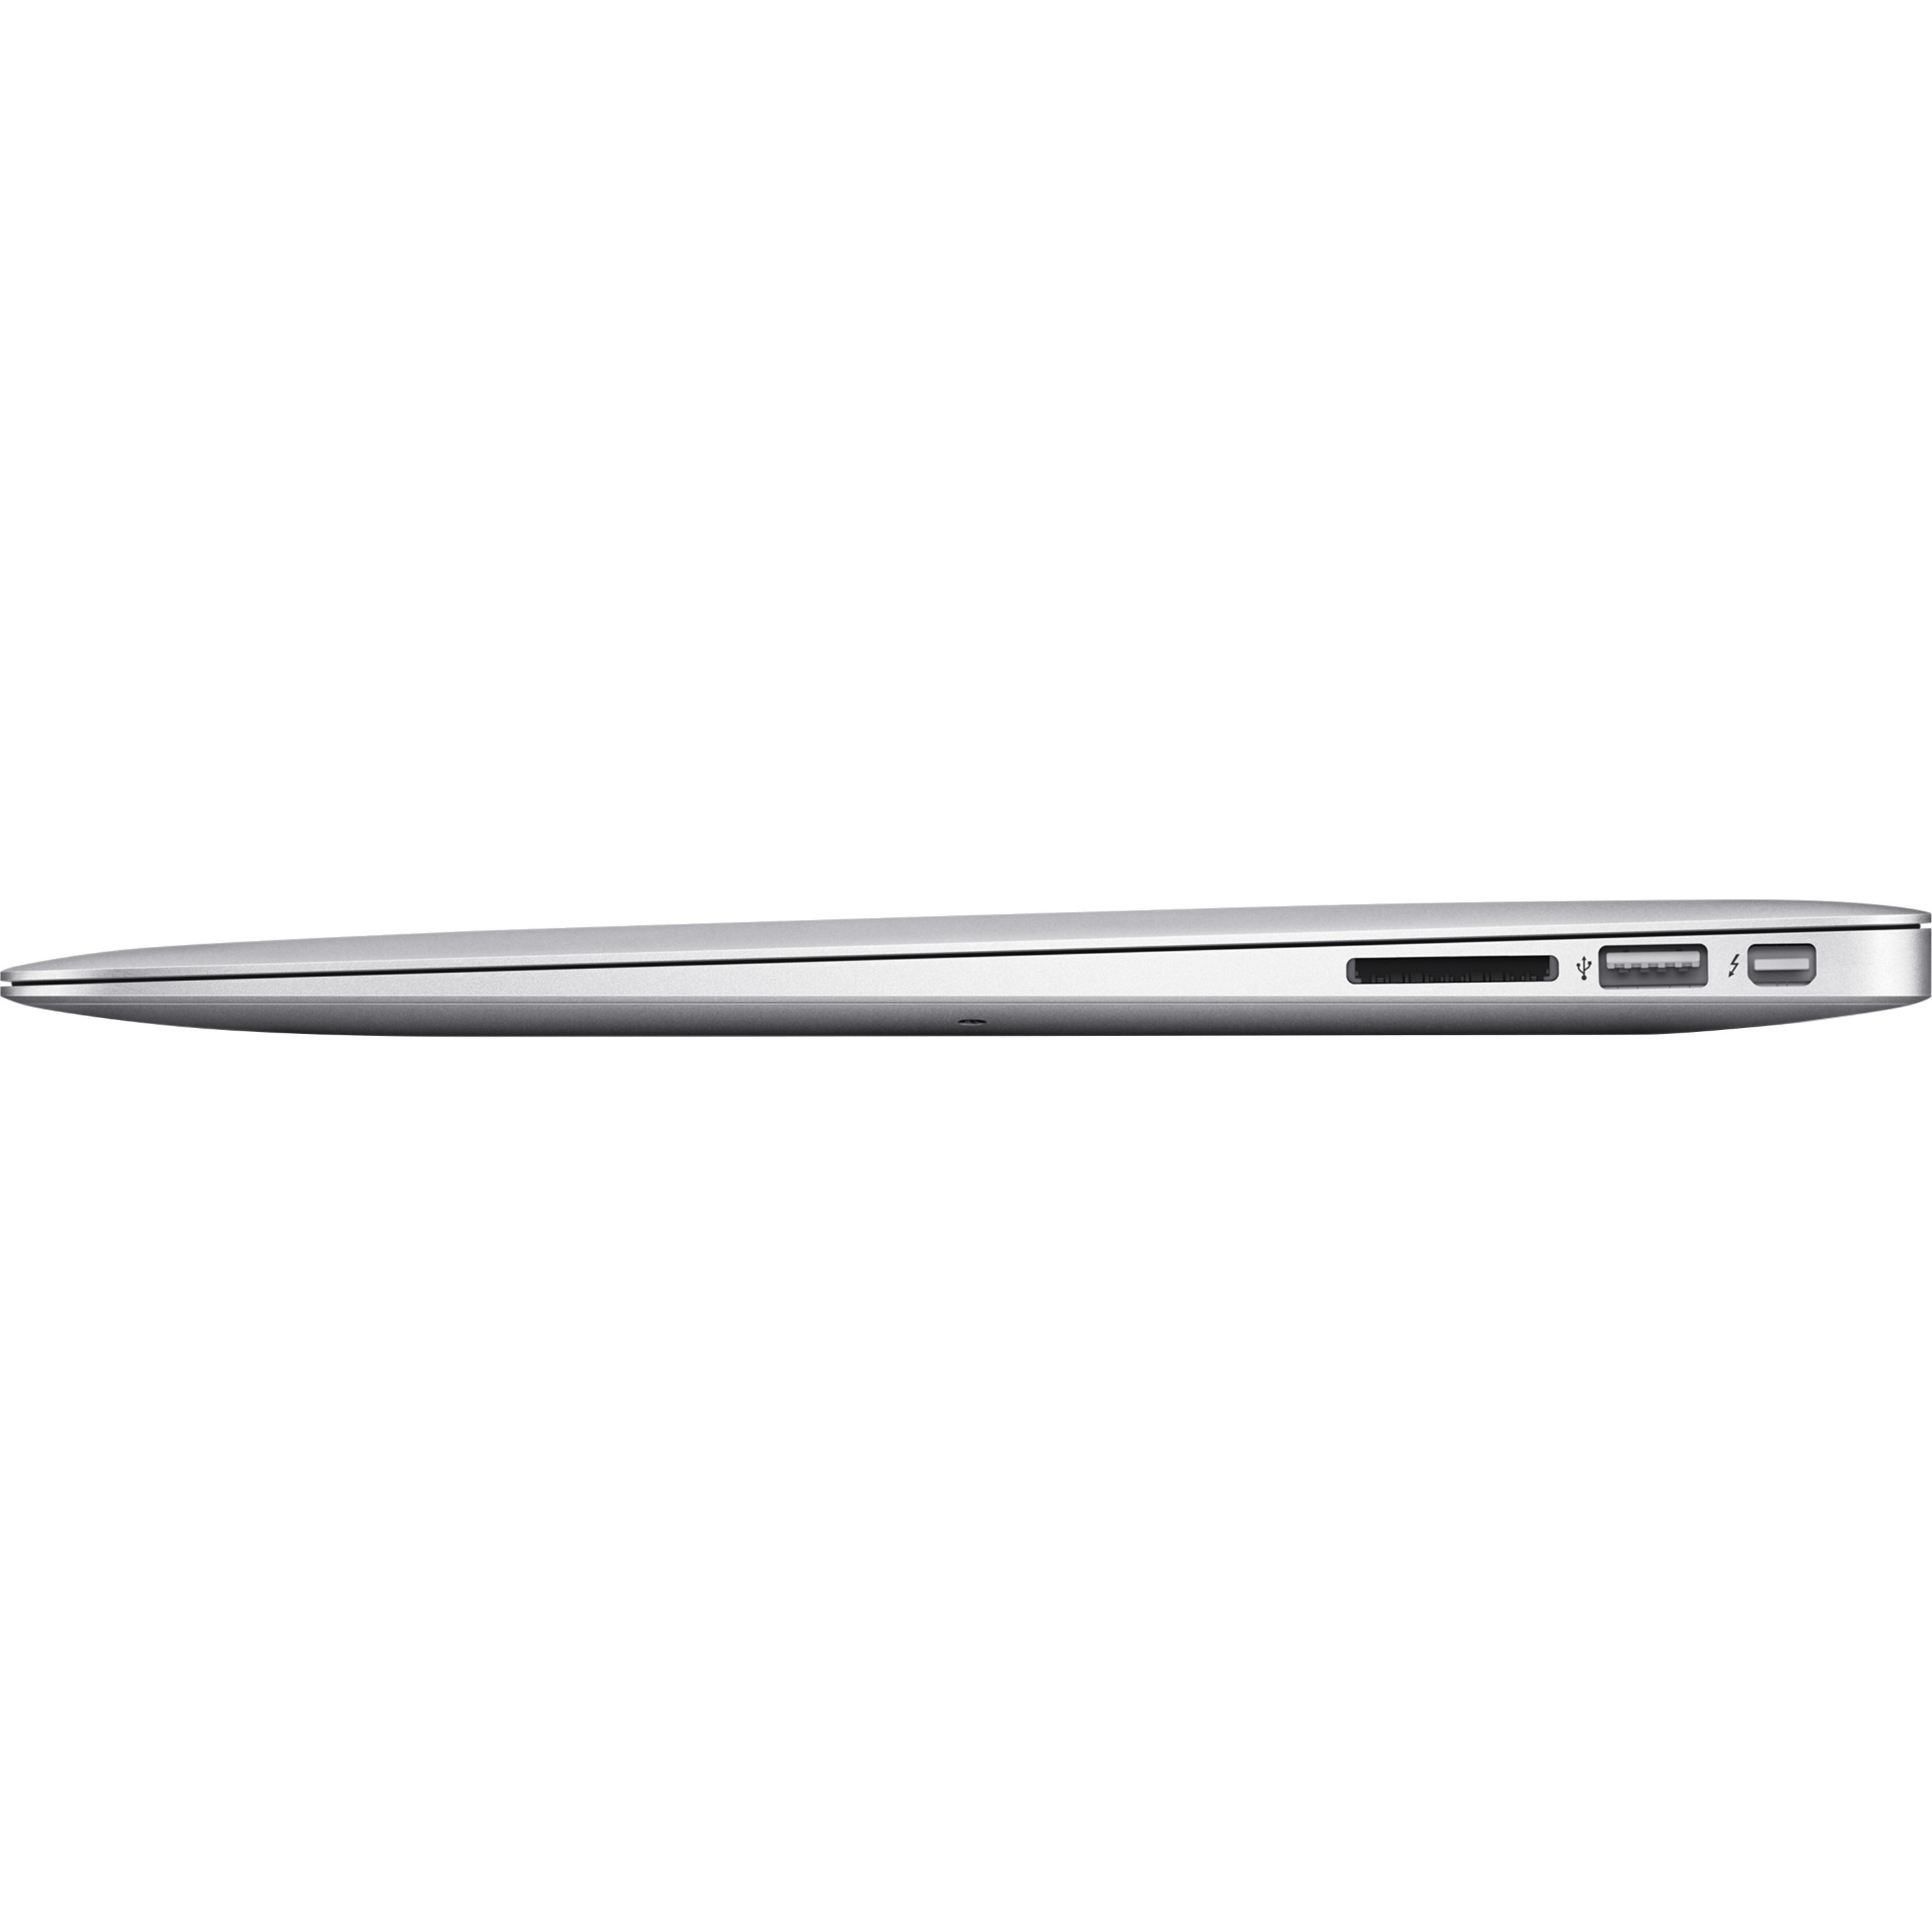 Apple MacBook Air MVFK2C/A 13.3